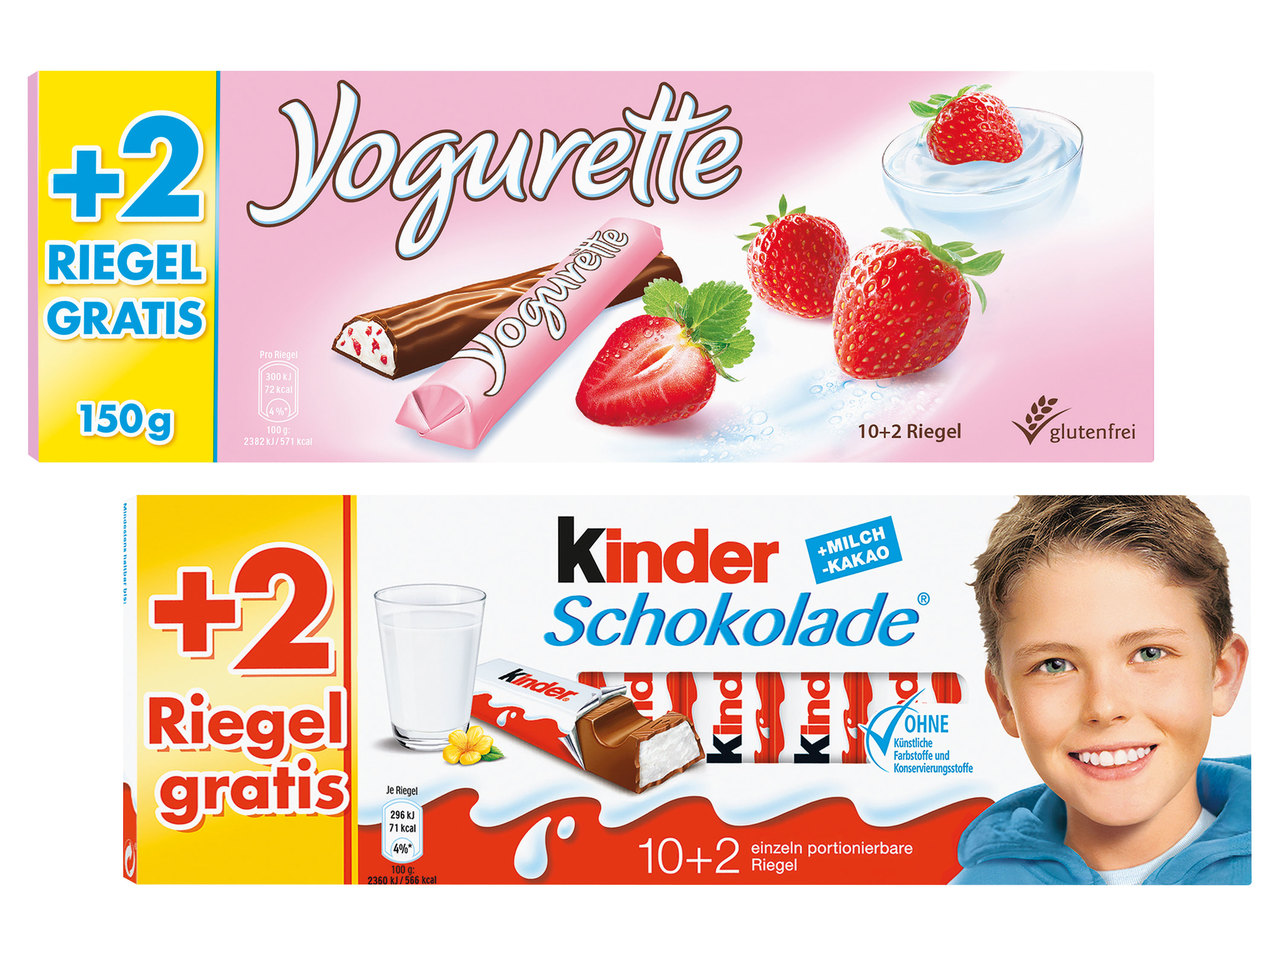 KINDER Schokolade/Yogurette